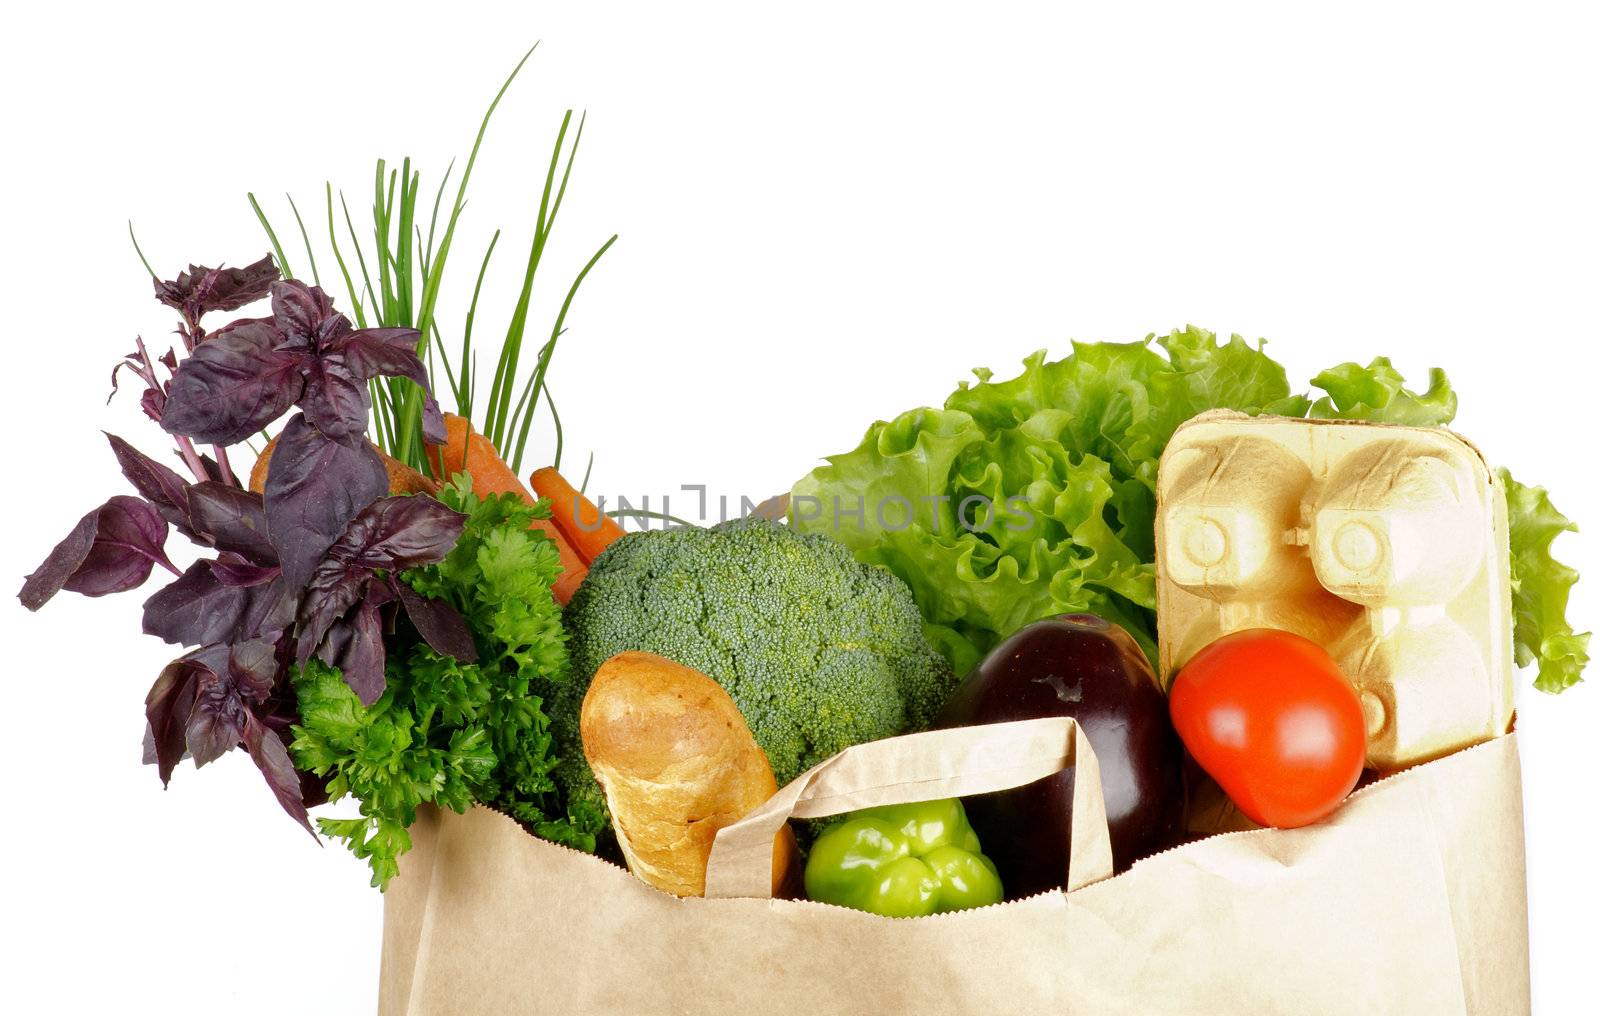 Healthy Eating in Shopping Bag by zhekos